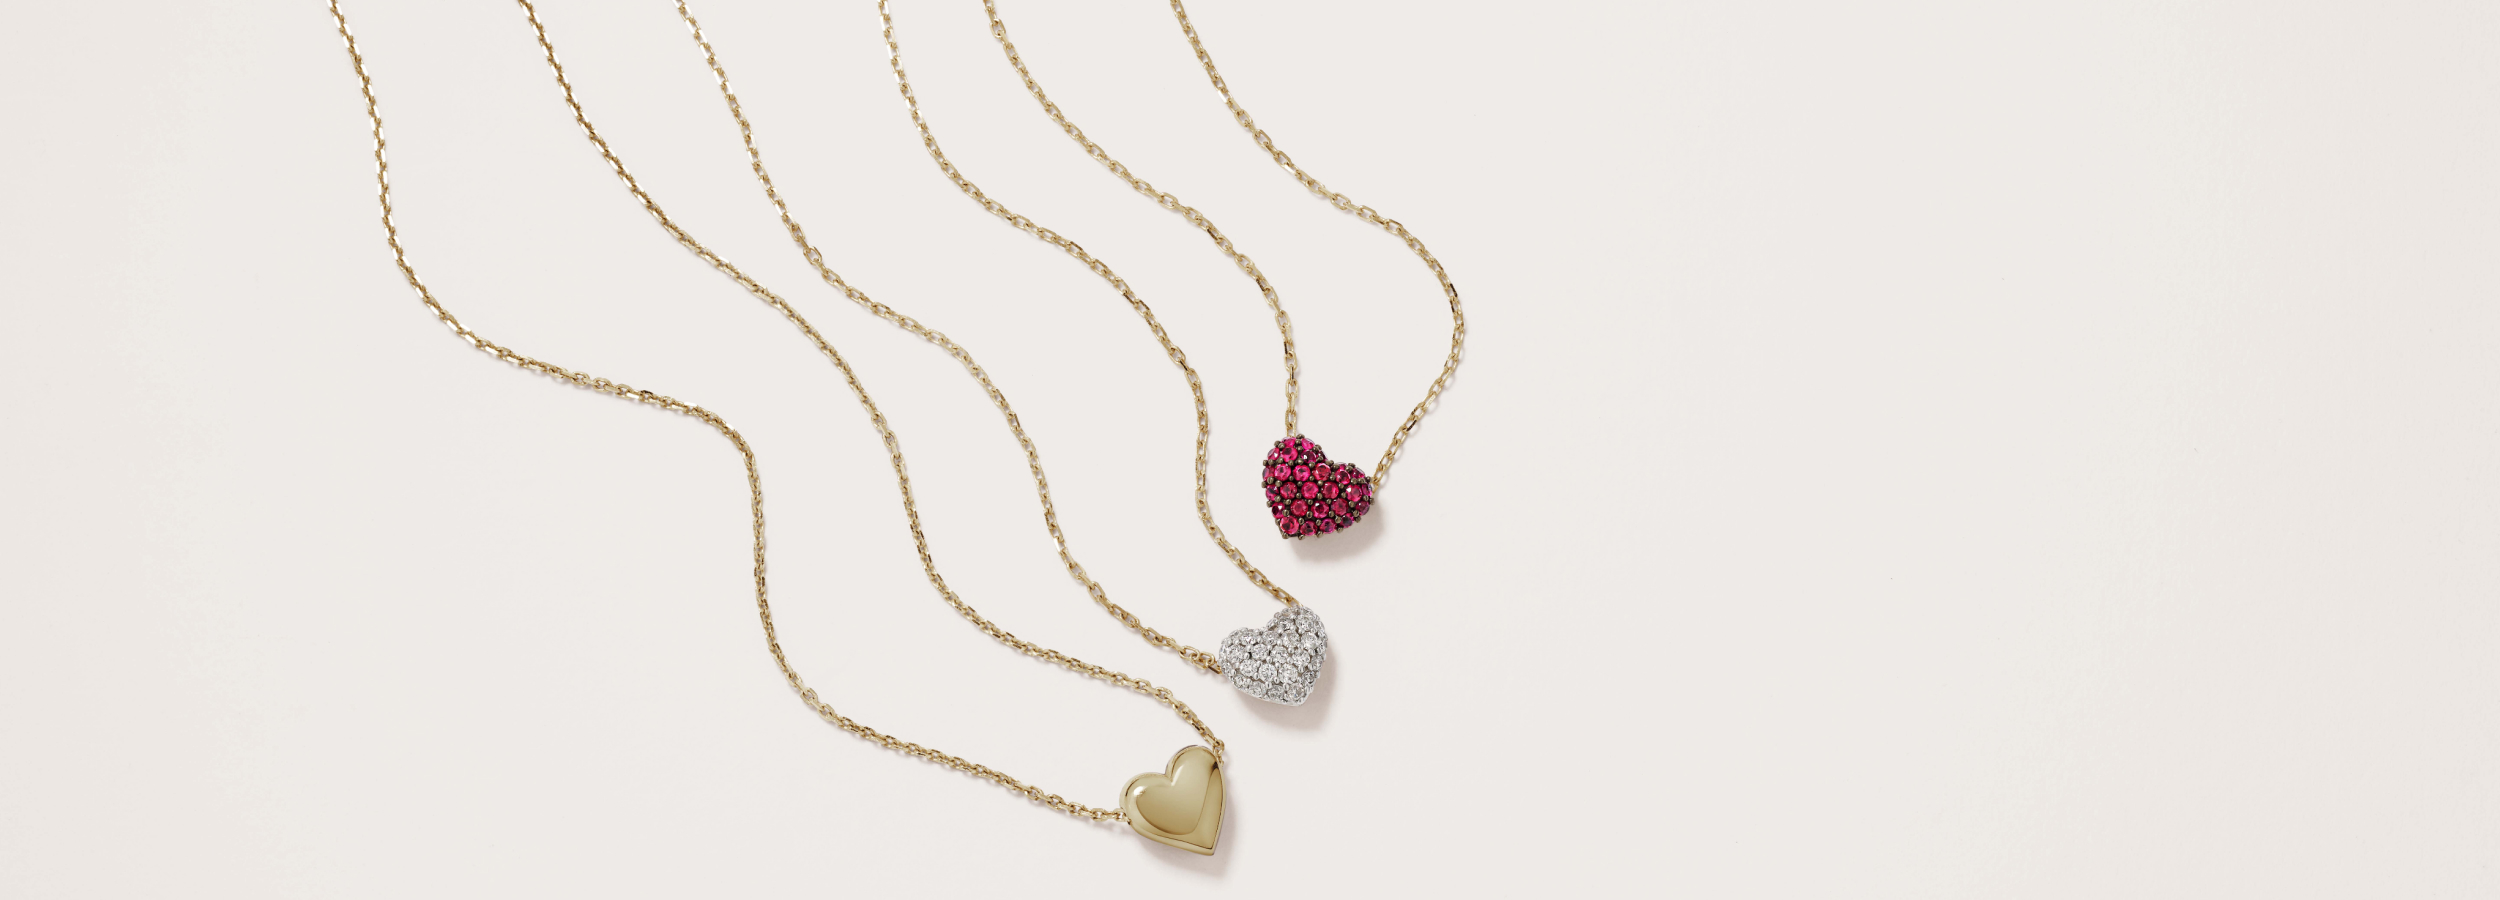 Three Heart Necklaces